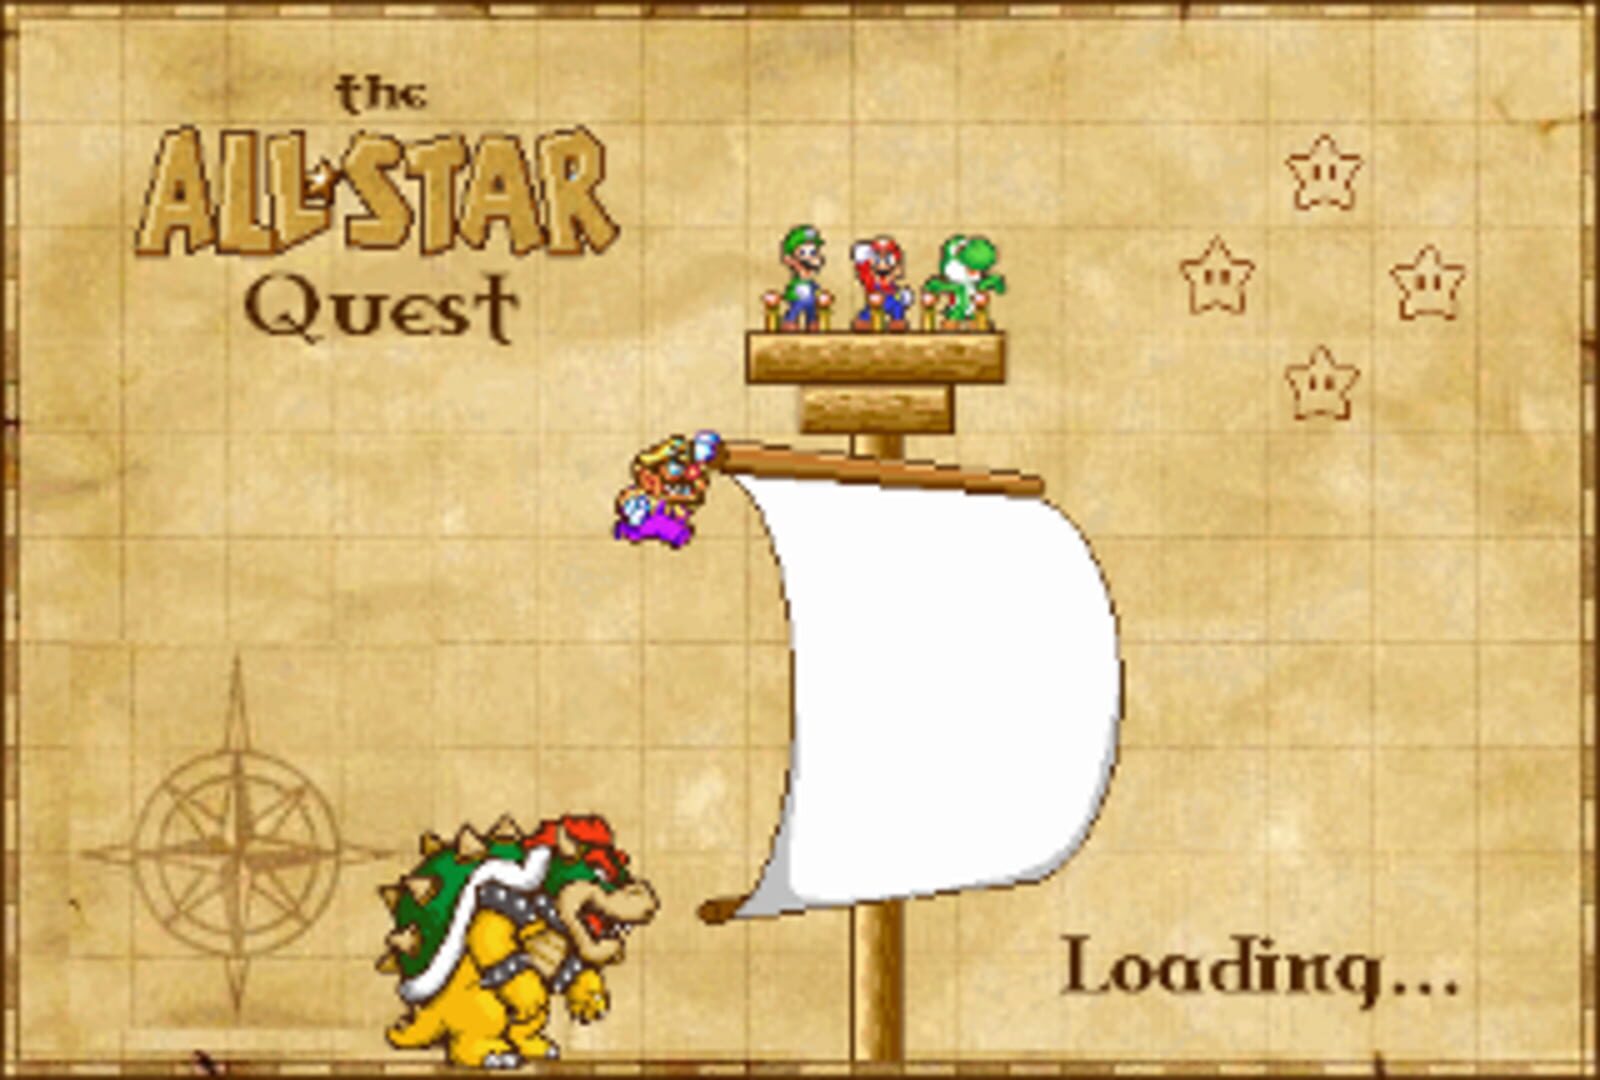 Super Mario Bros. All-Star Quest